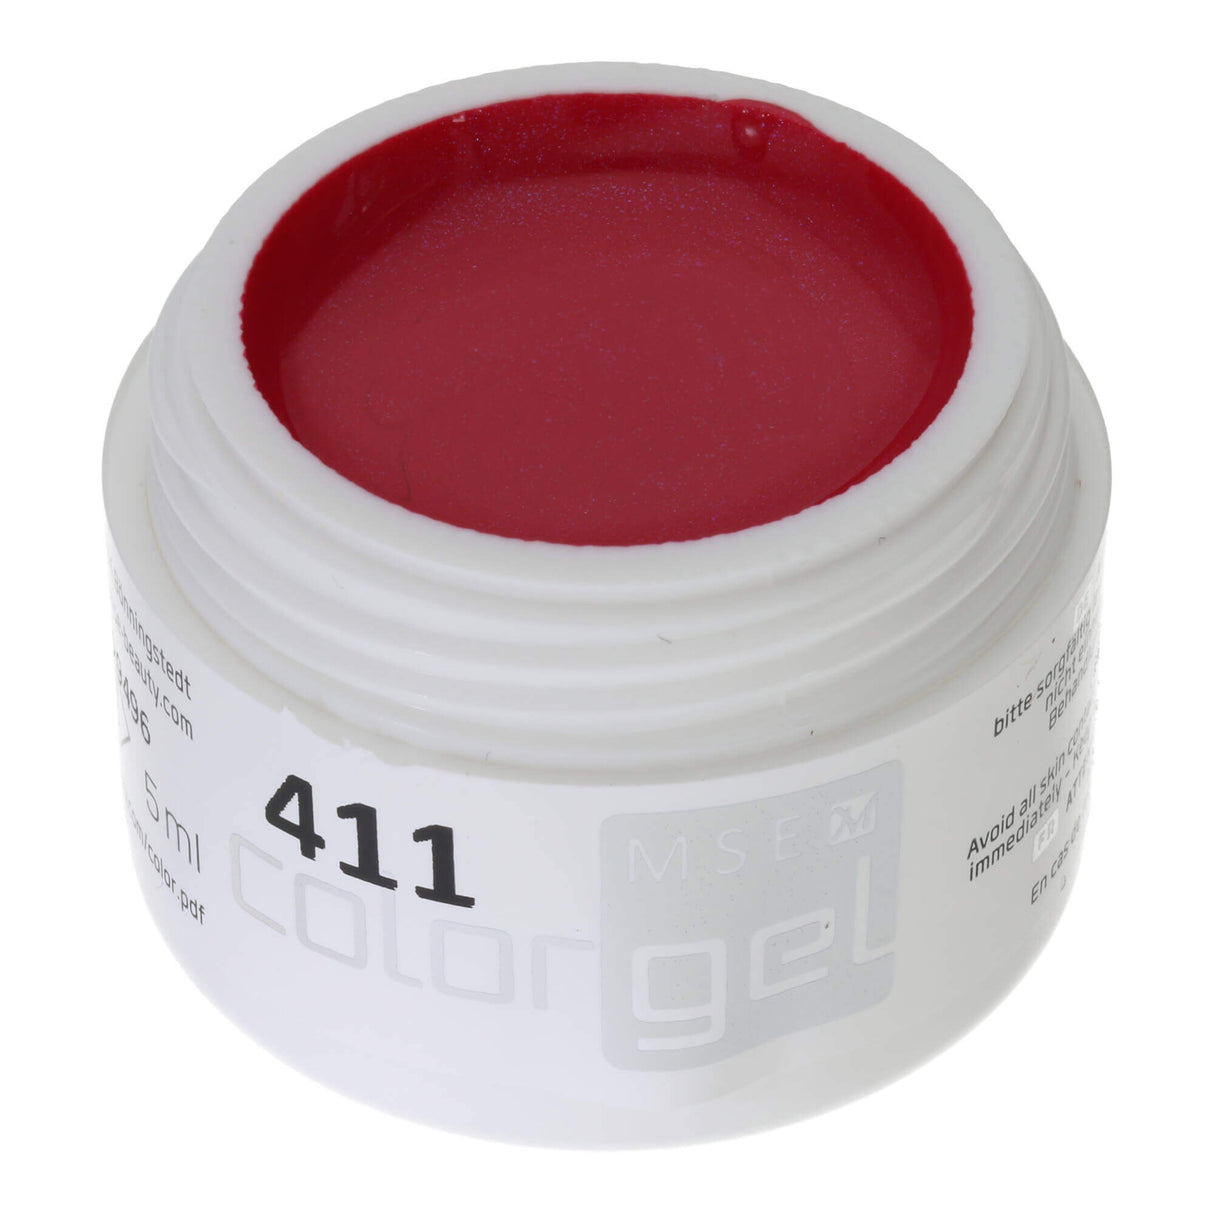 # 411 Premium EFFECT Color Gel 5ml Luminous, softly shimmering pink